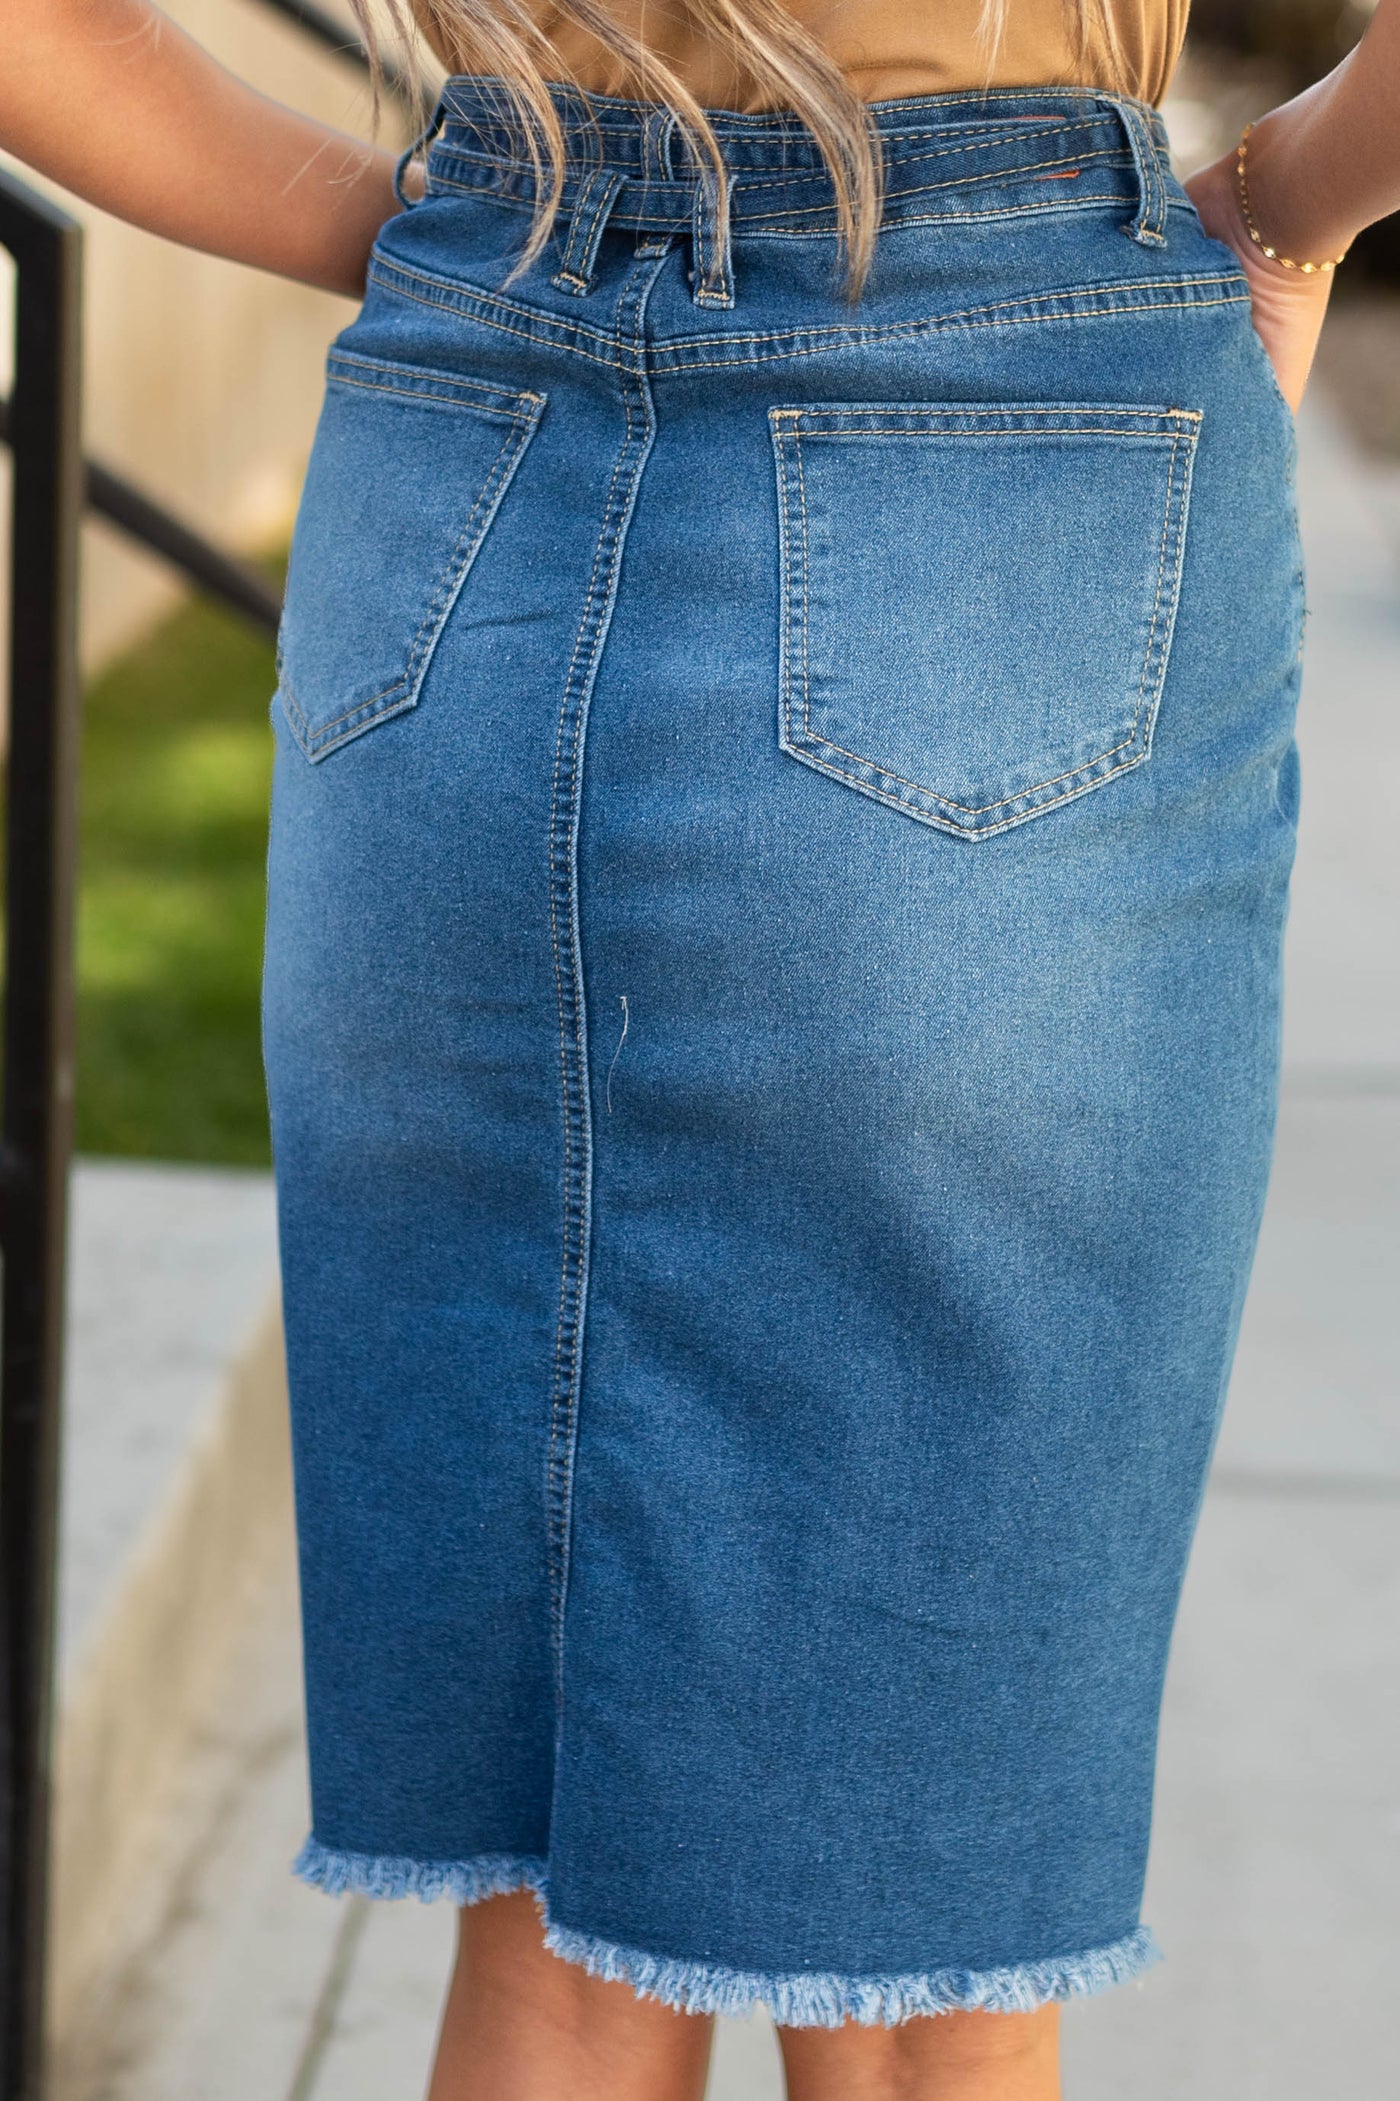 Back view of indigo skirt